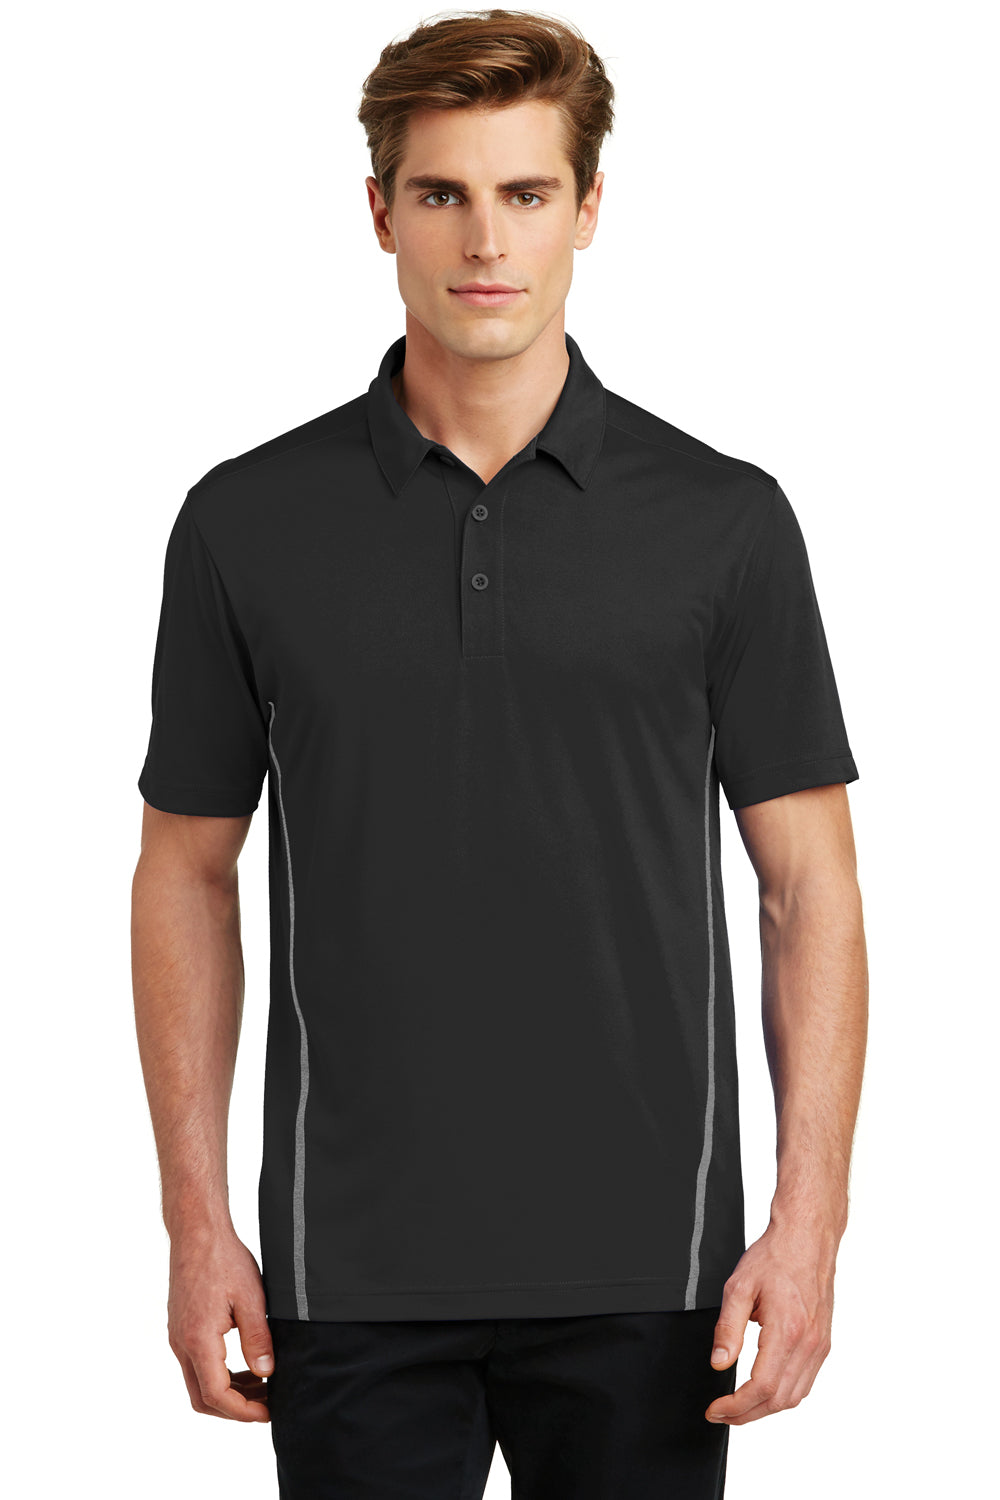 Sport-Tek ST620 Mens Tough Moisture Wicking Short Sleeve Polo Shirt Black/Heather Grey Front